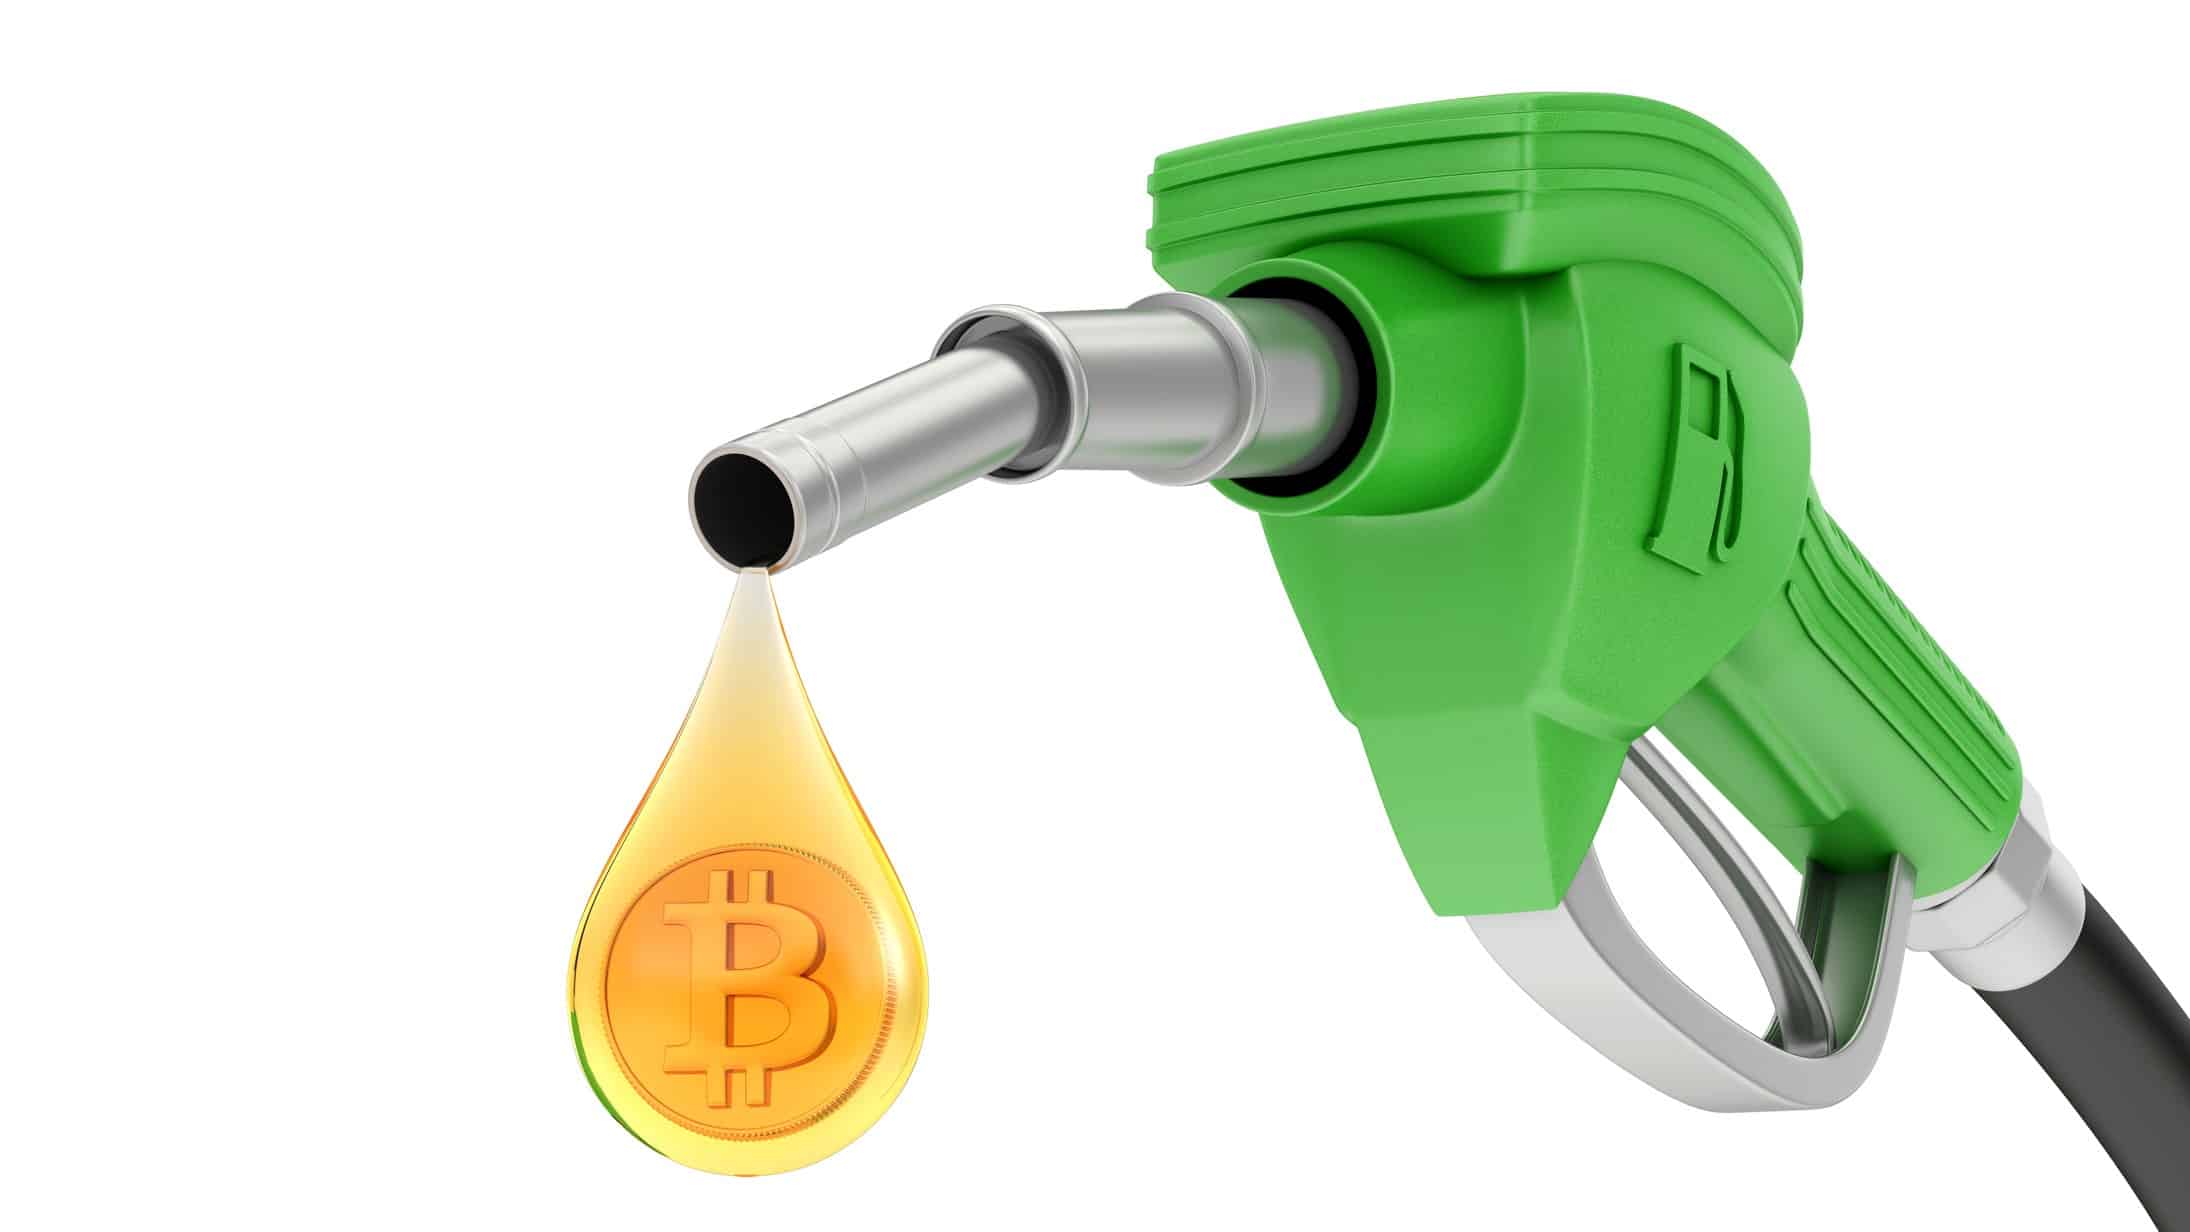 bitcoin symbol in drop of fuel from fuel pump